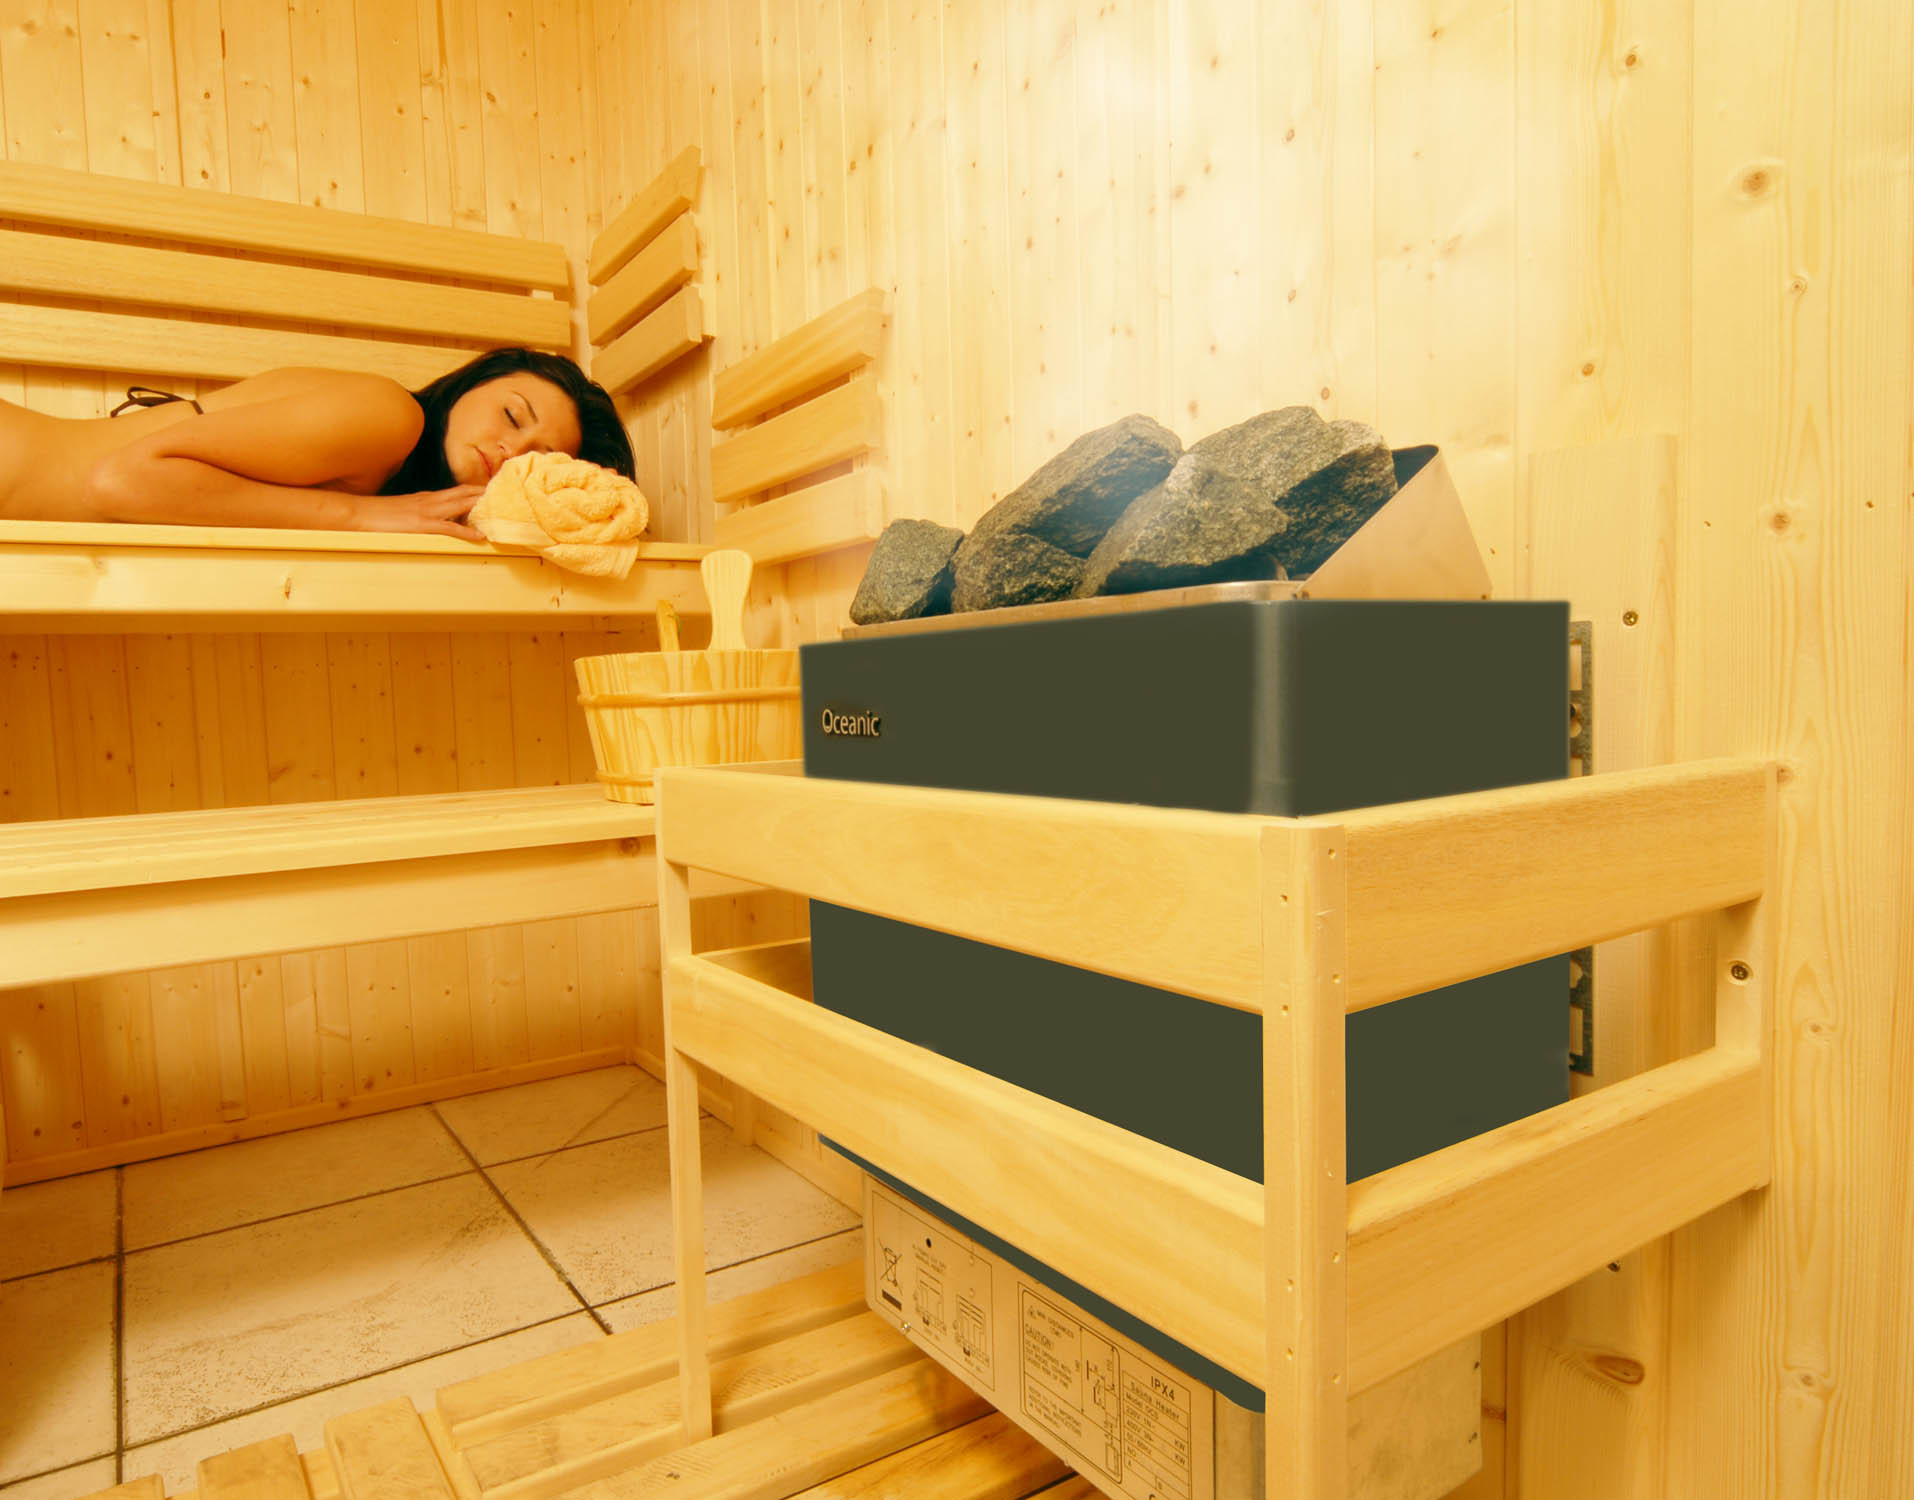 Oceanic Finnish Sauna Home OCSB Heater